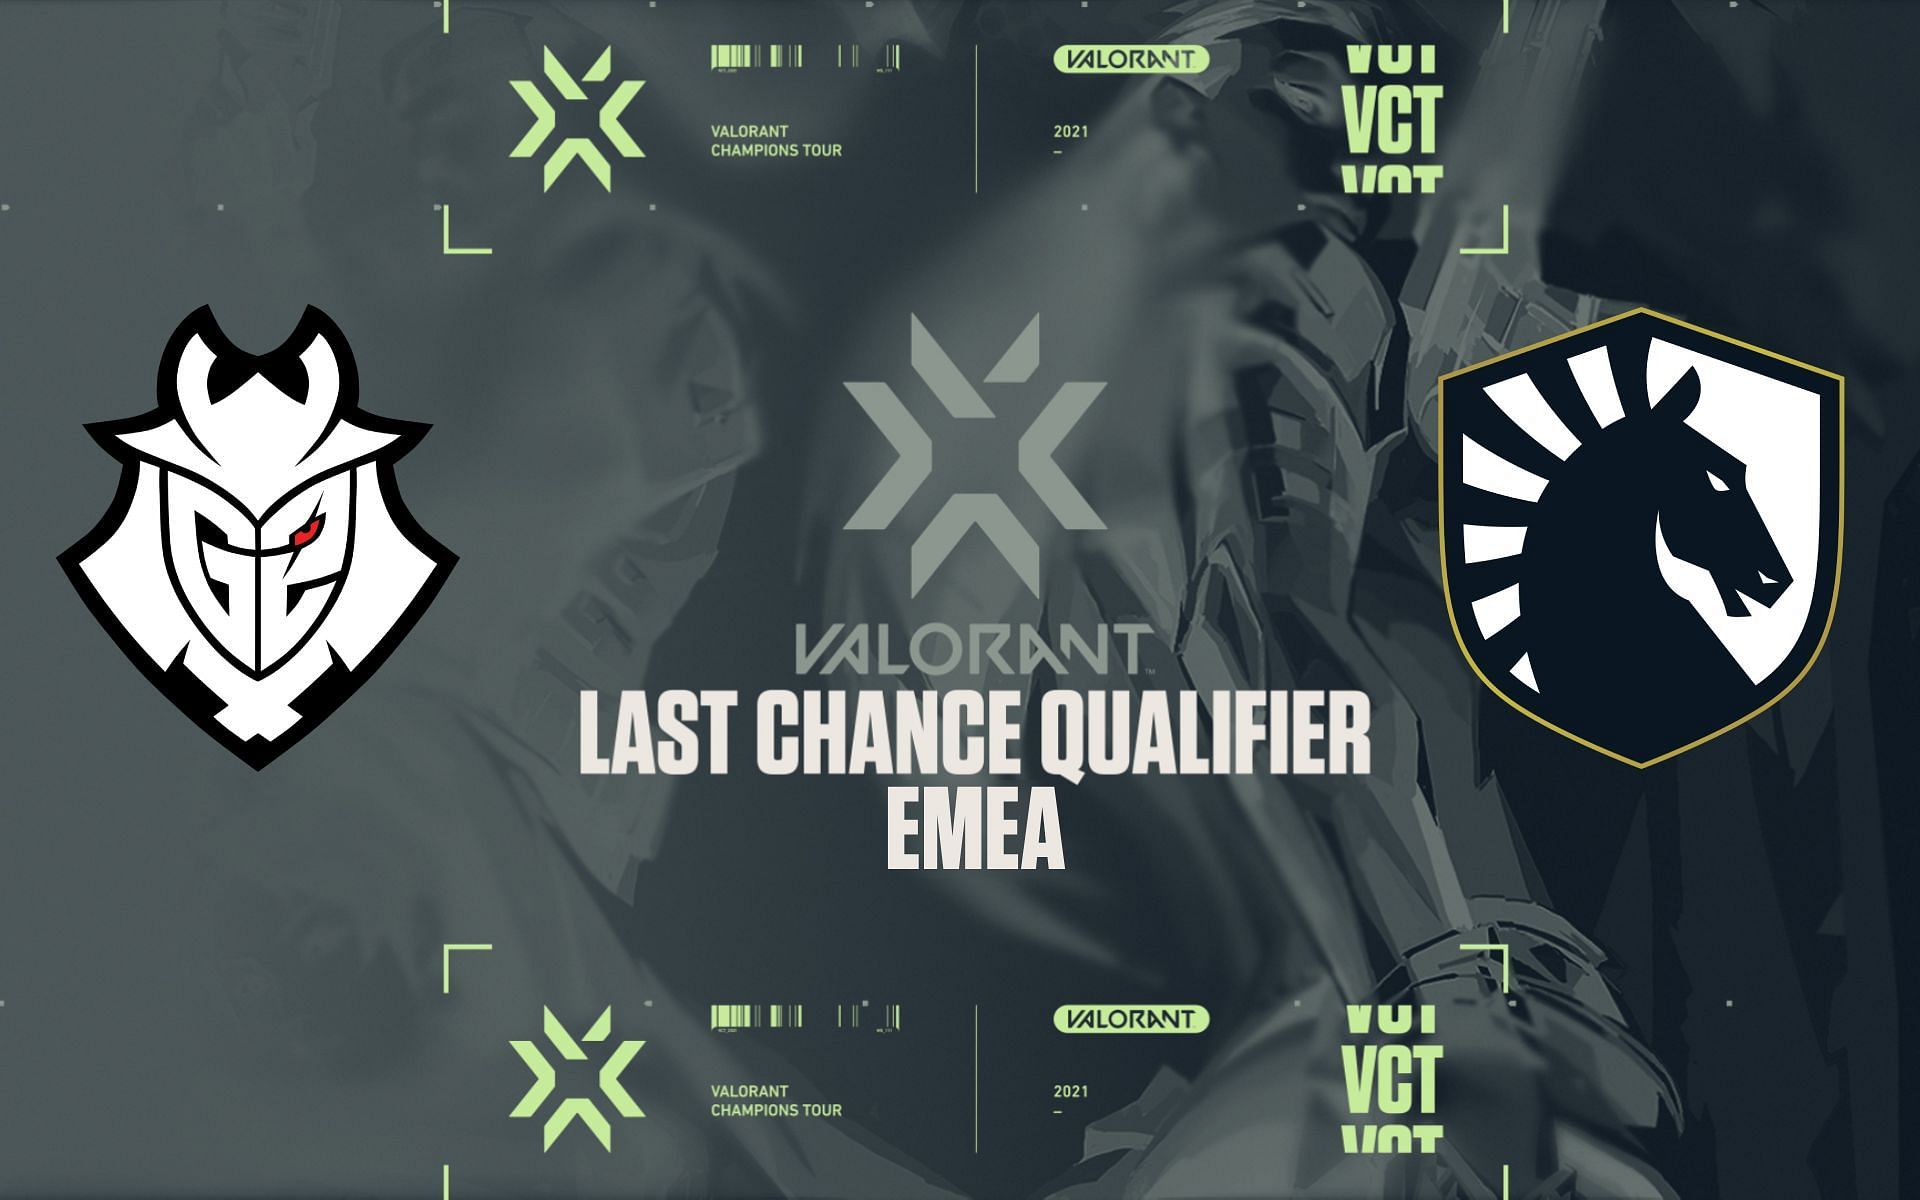 Valorant Champions Tour EMEA Last Chance Qualifier (Image by Riot Games)